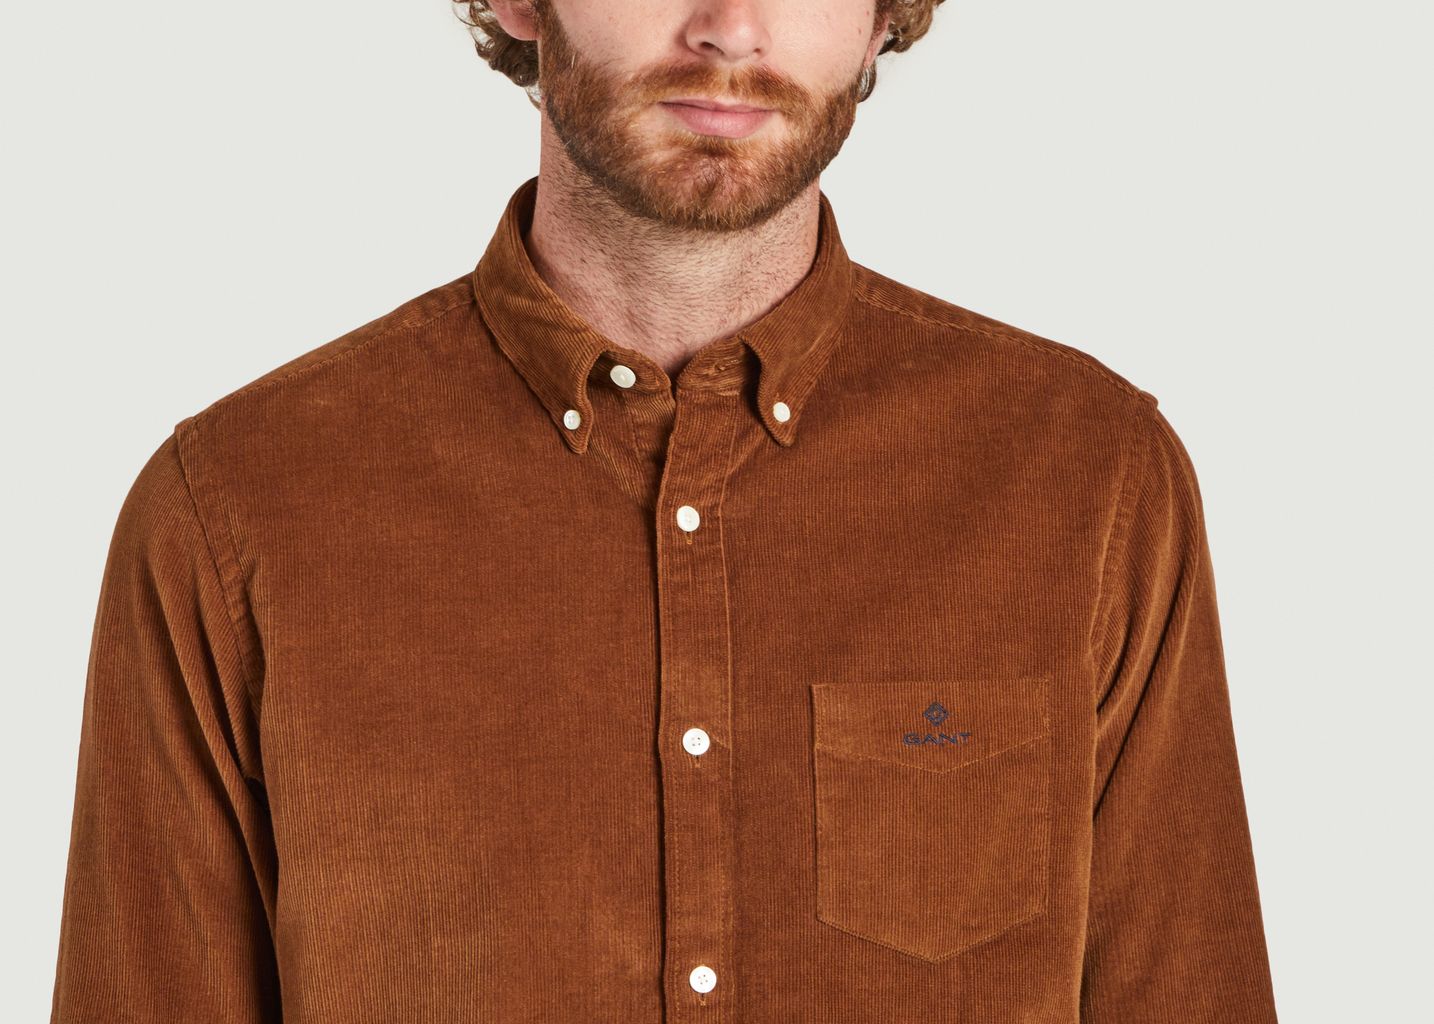 Straight fit corduroy shirt - Gant